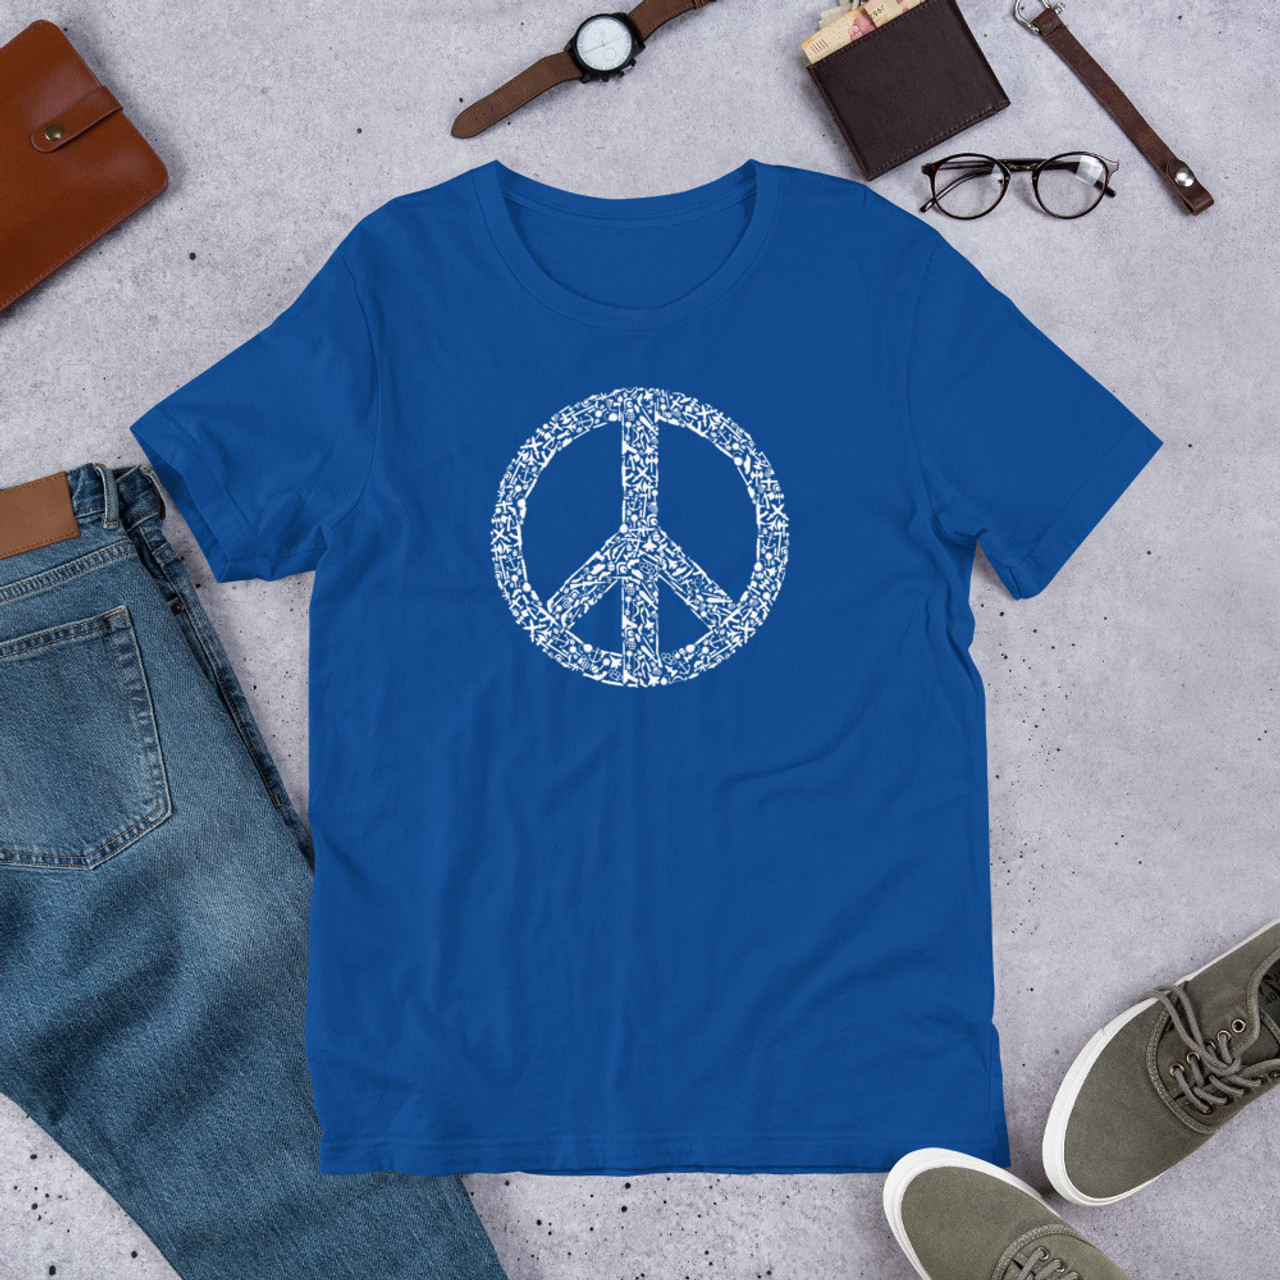 True Royal T-Shirt - Bella + Canvas 3001 War and Peace